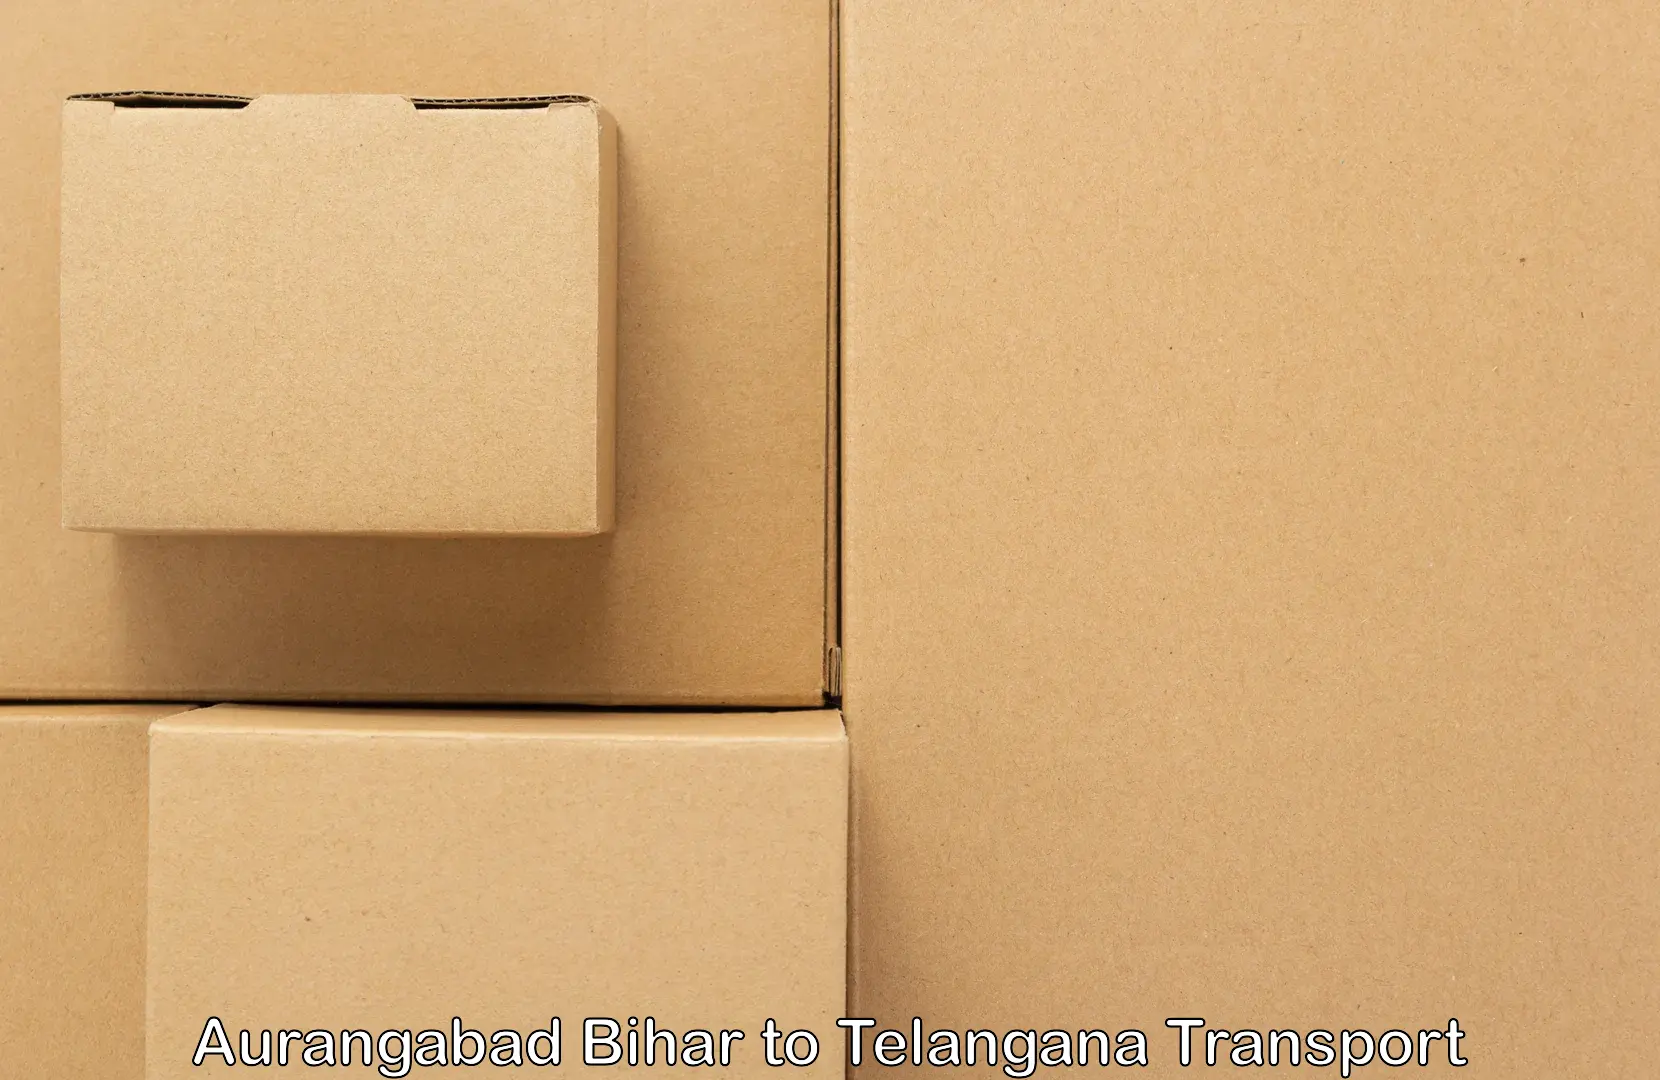 Package delivery services Aurangabad Bihar to Vikarabad